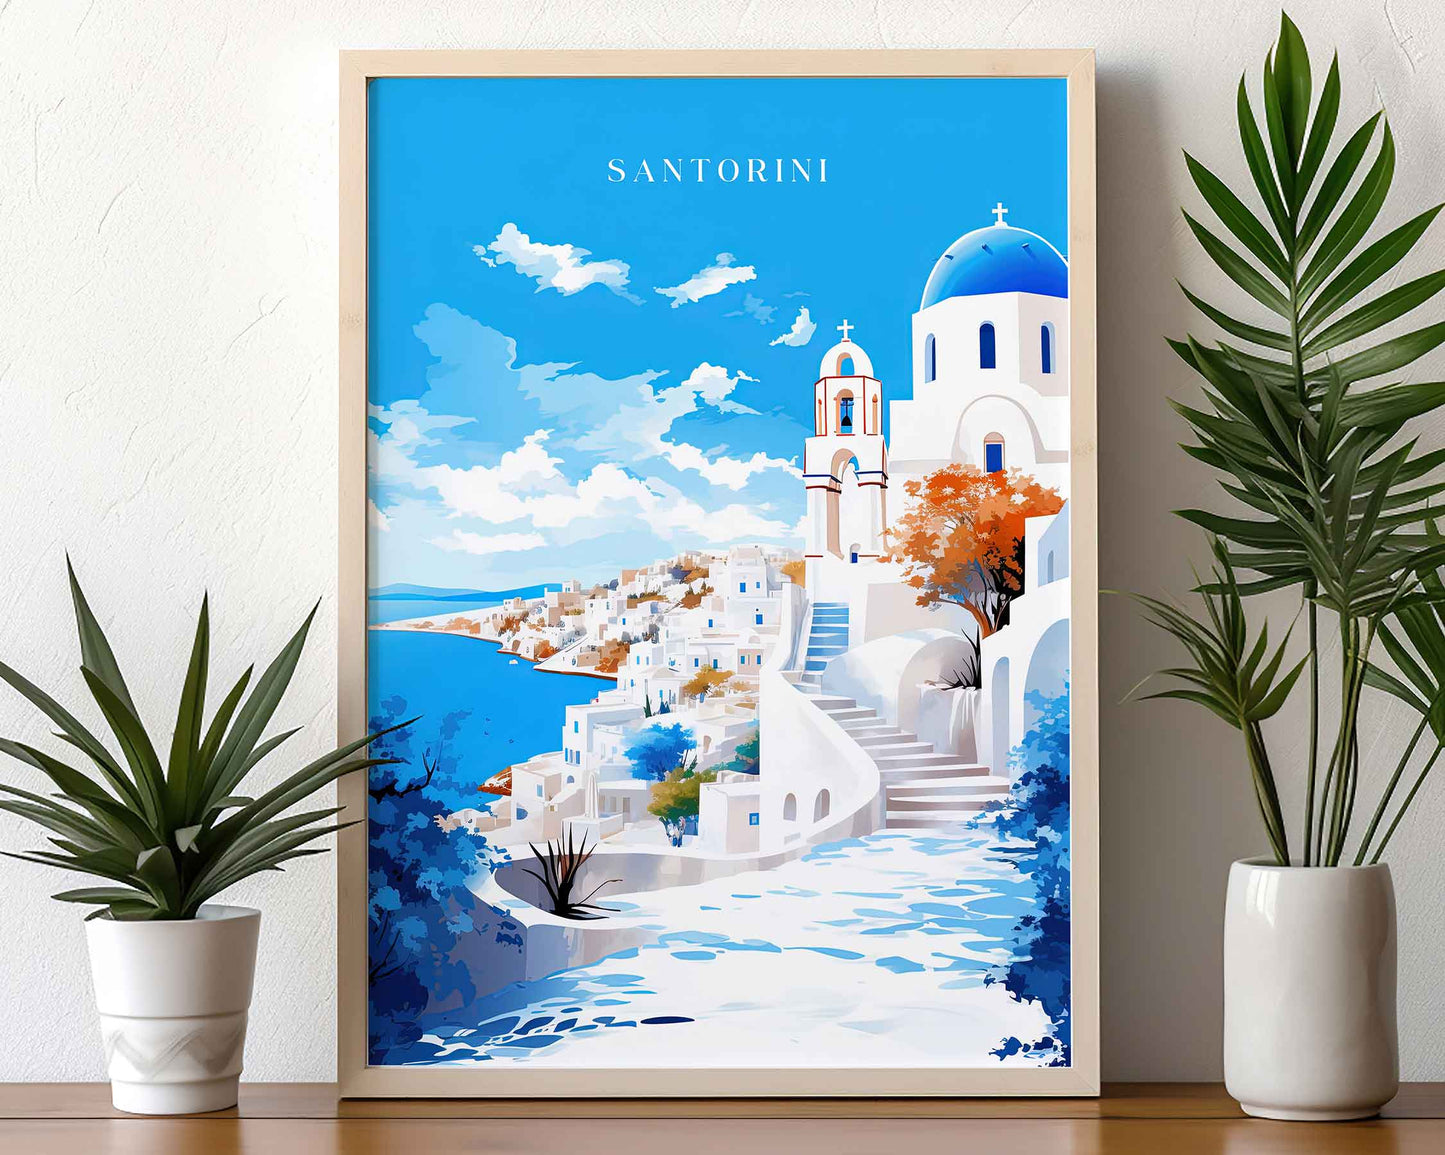 Framed Image of Santorini Greek Islands Travel Poster Print Wall Art